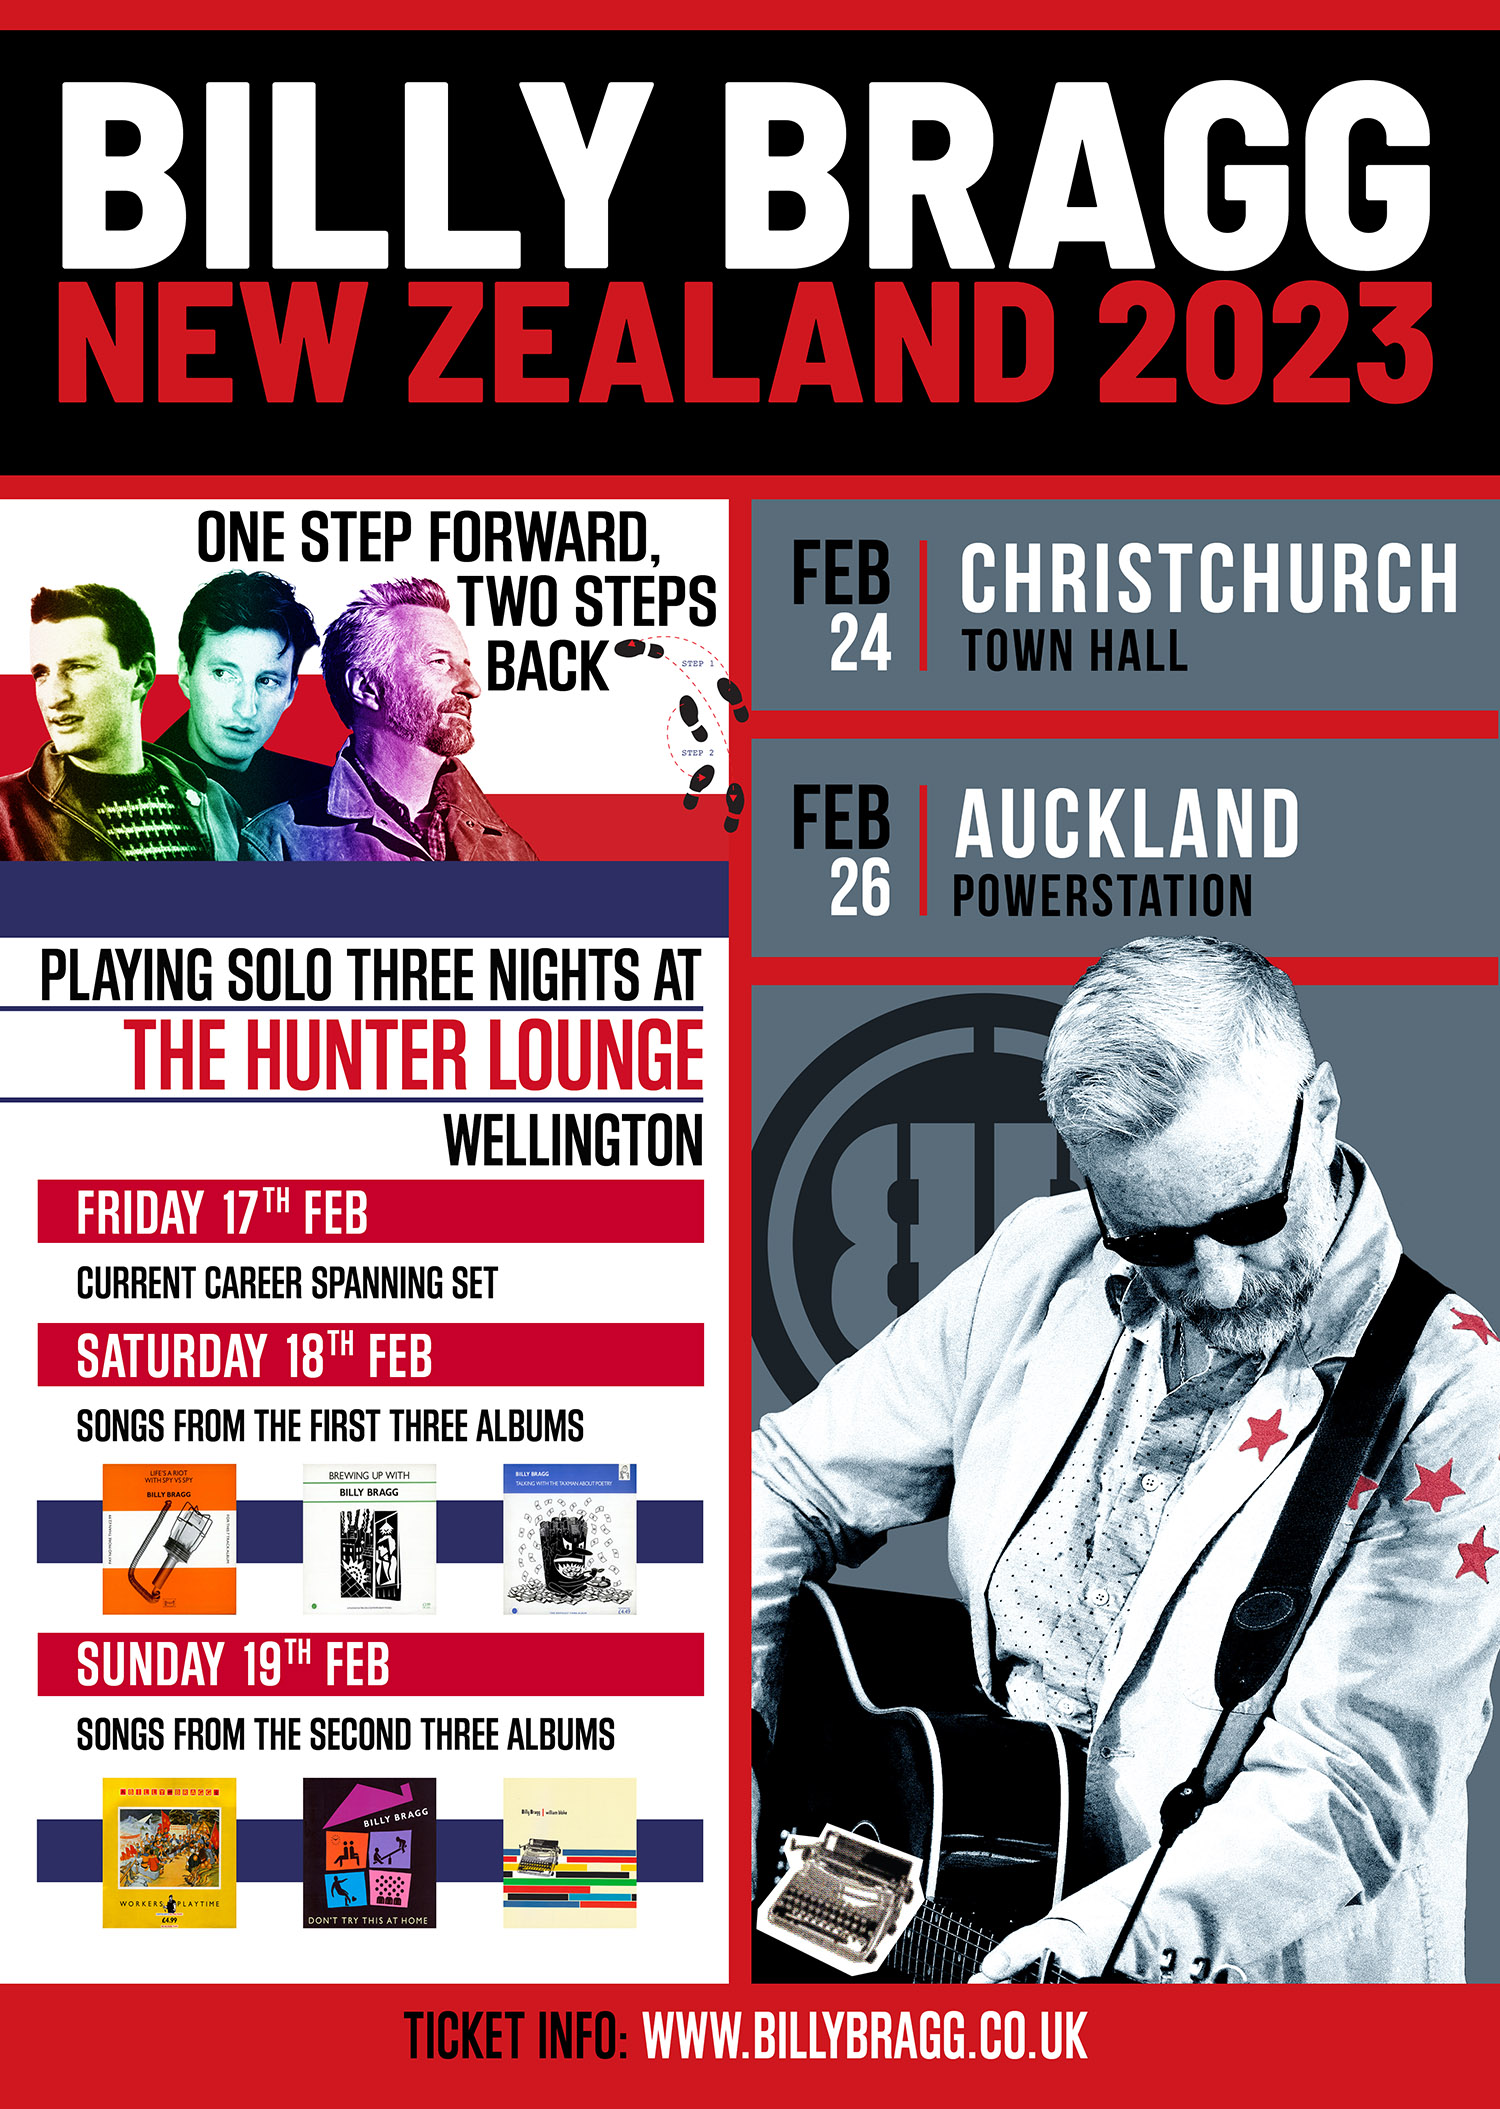 https://handsometours.com/wp-content/uploads/2022/05/BB_NZ23_combined_A3-copy.jpg